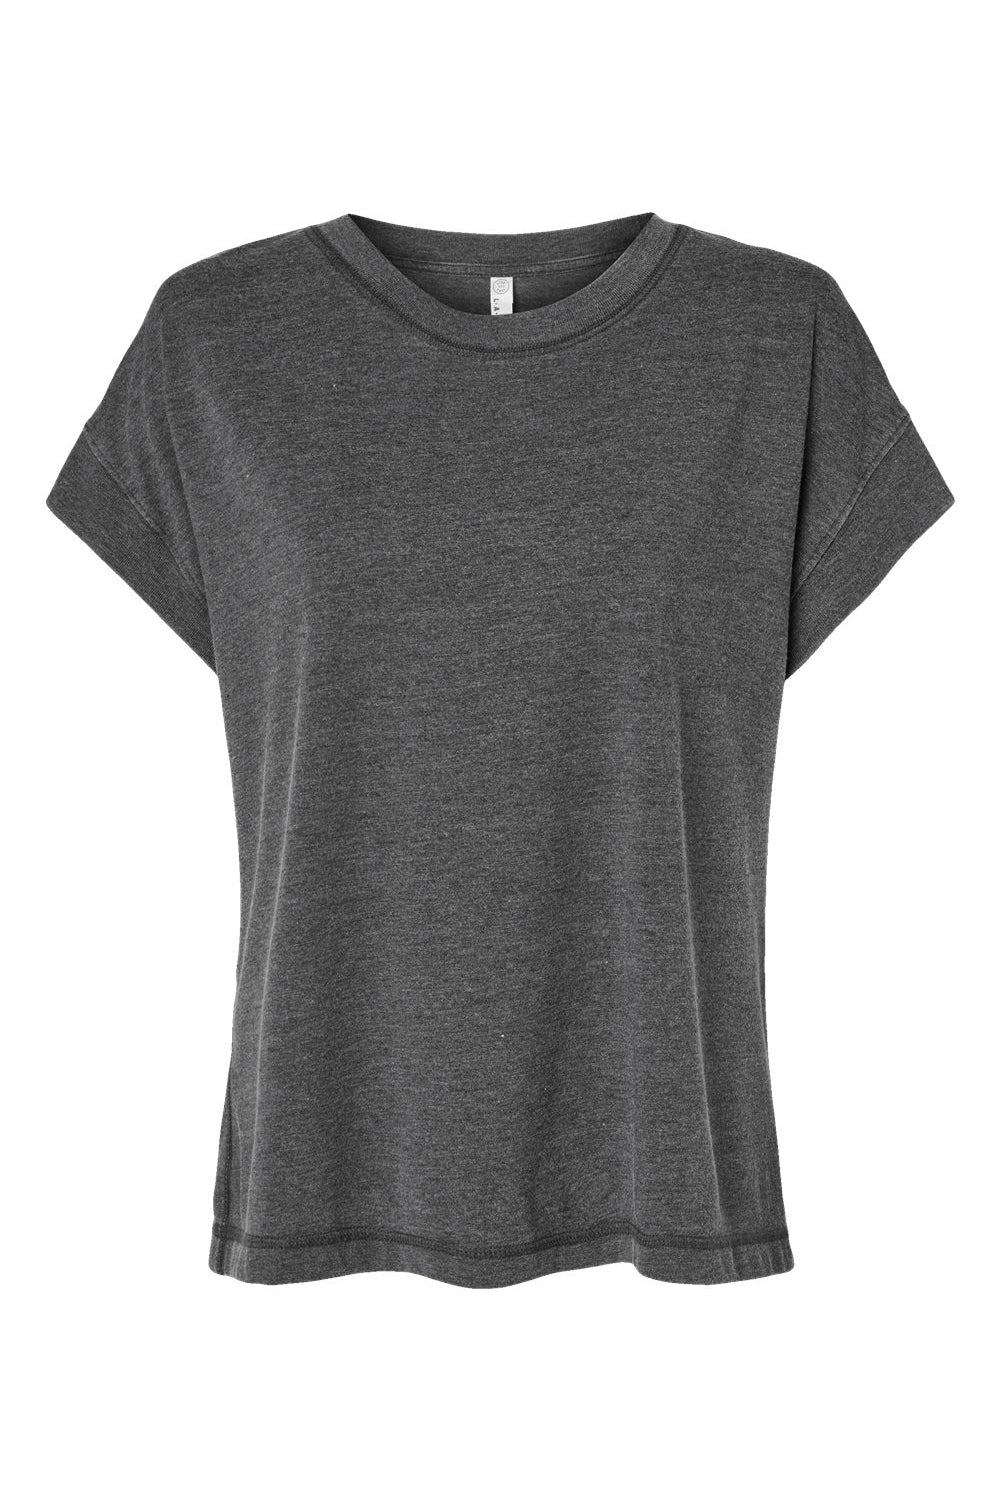 LAT 3502 Womens Relaxed Vintage Wash Short Sleeve Crewneck T-Shirt Black Flat Front